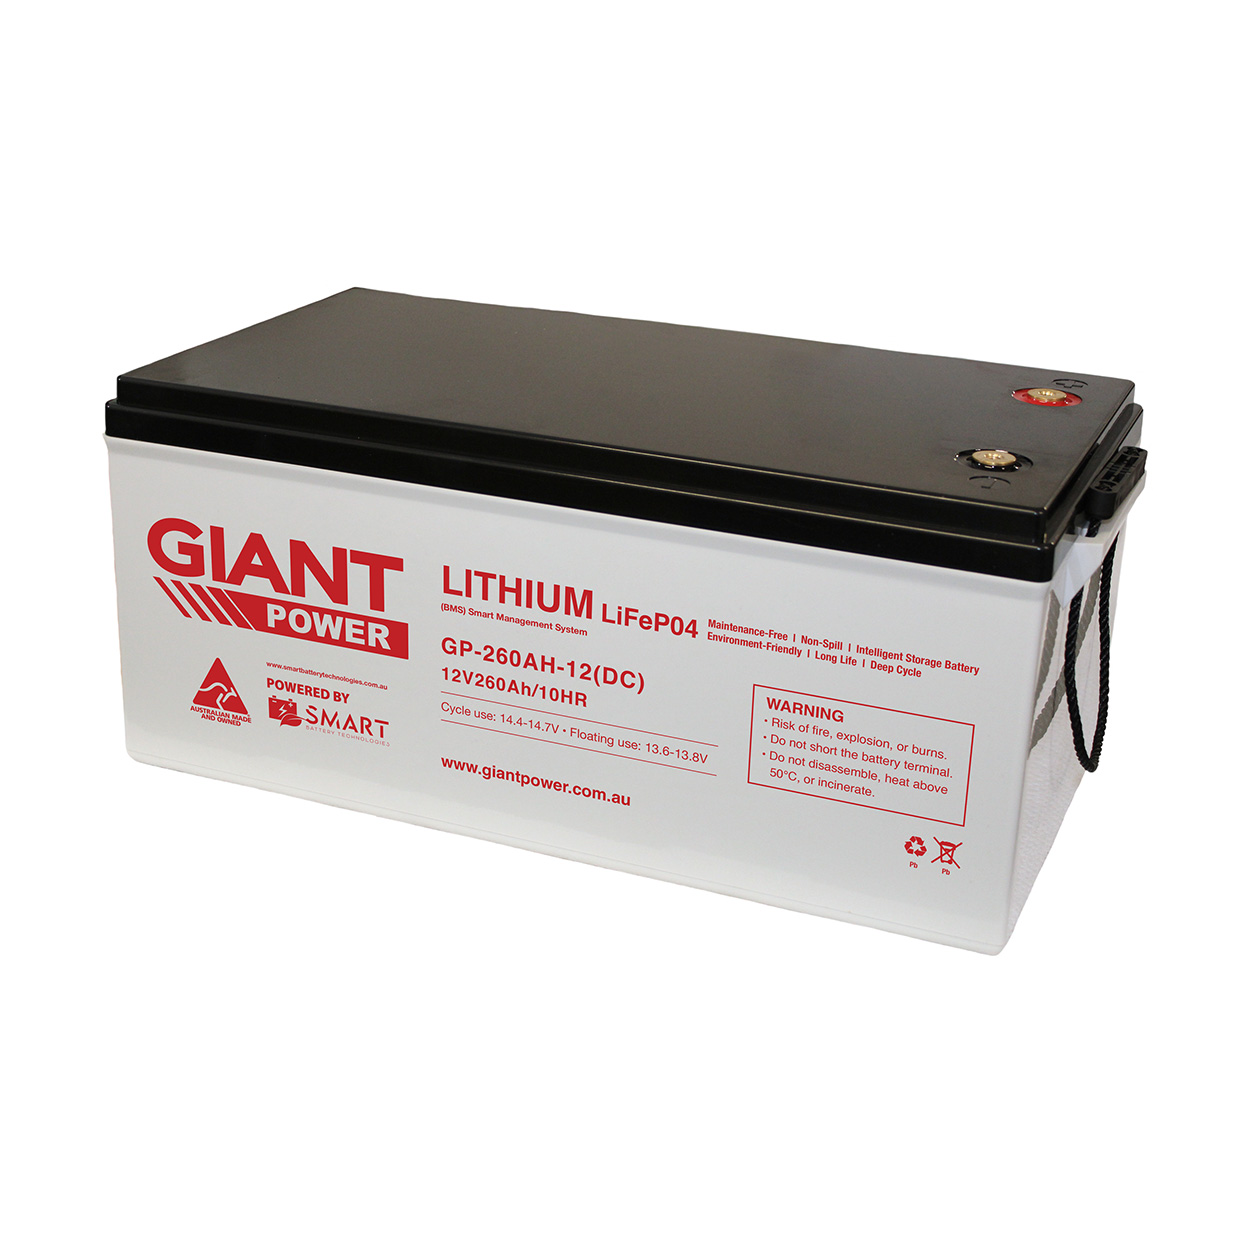 Giant Power 260Ah Lithium Batteries